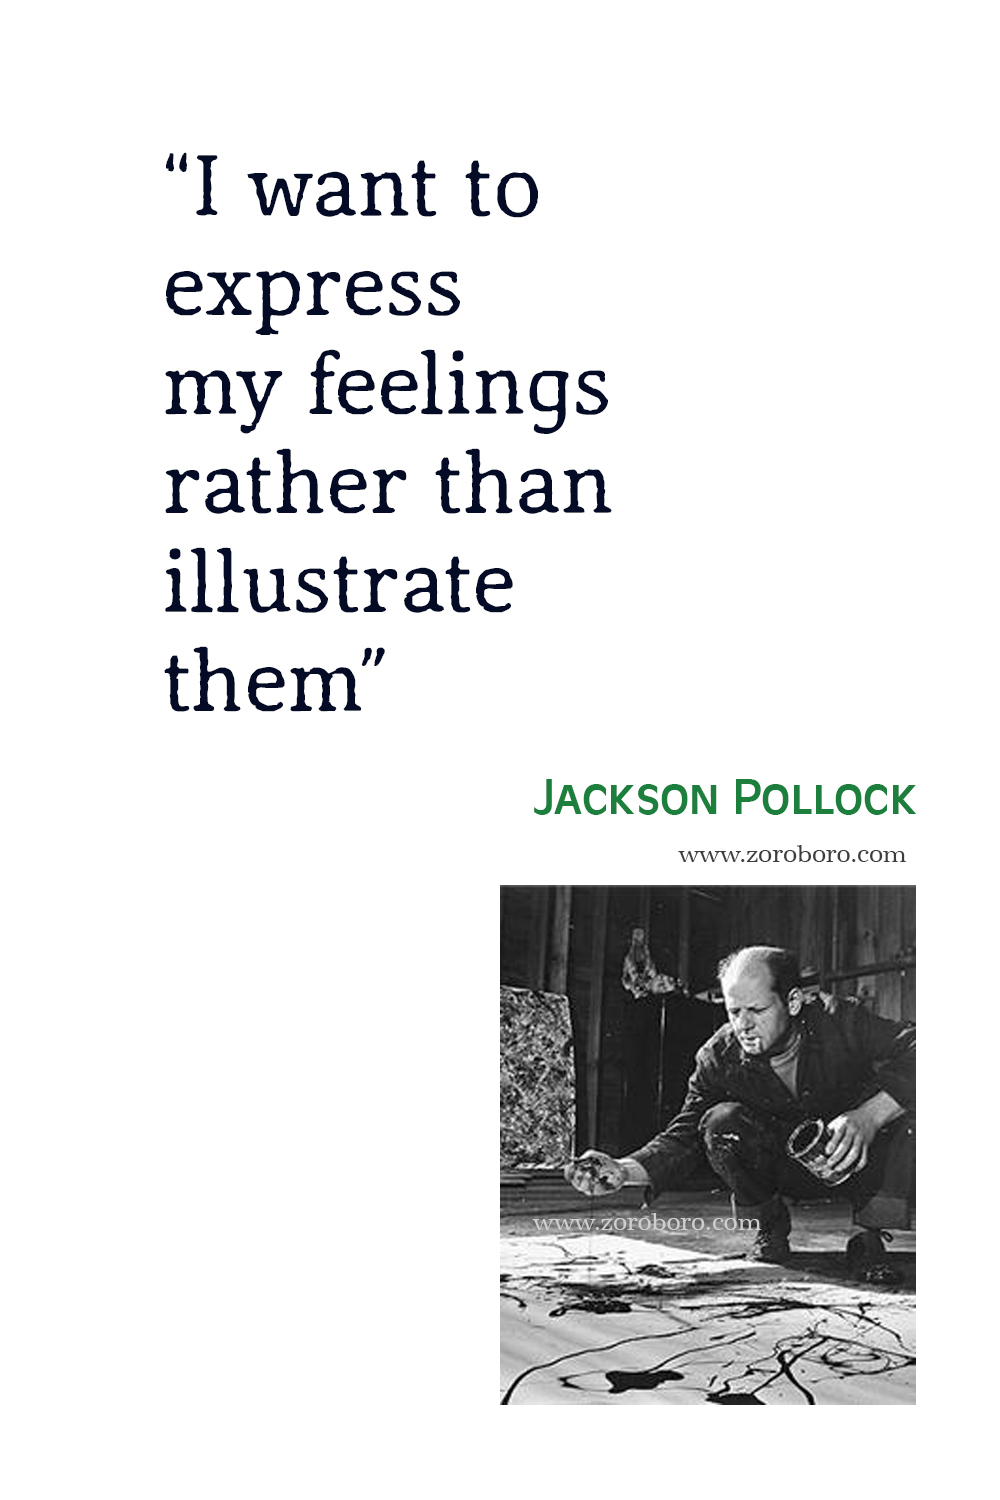 Jackson Pollock Quotes, Jackson Pollock Paintings, Jackson Pollock Canvas Quotes, Jackson Pollock Techniques Quotes.